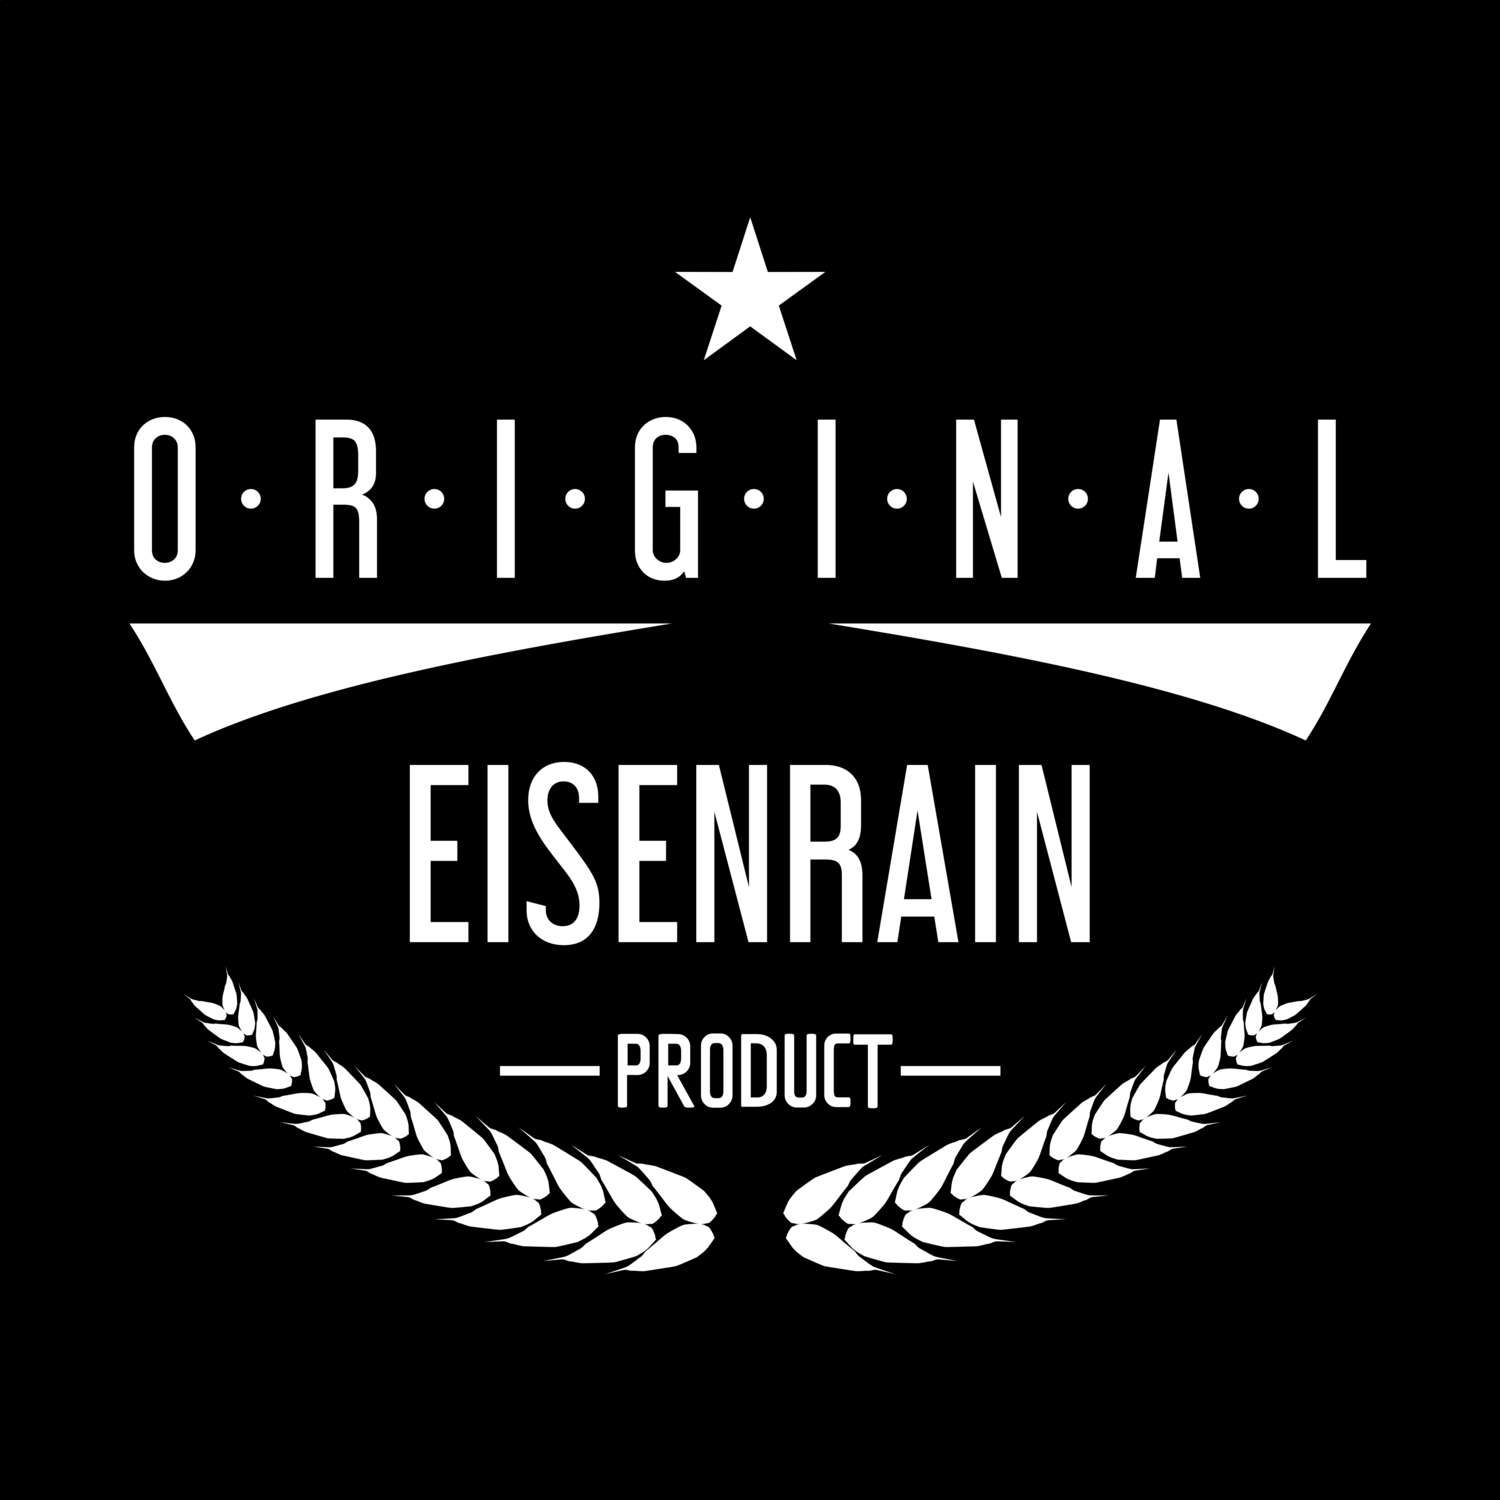 Eisenrain T-Shirt »Original Product«